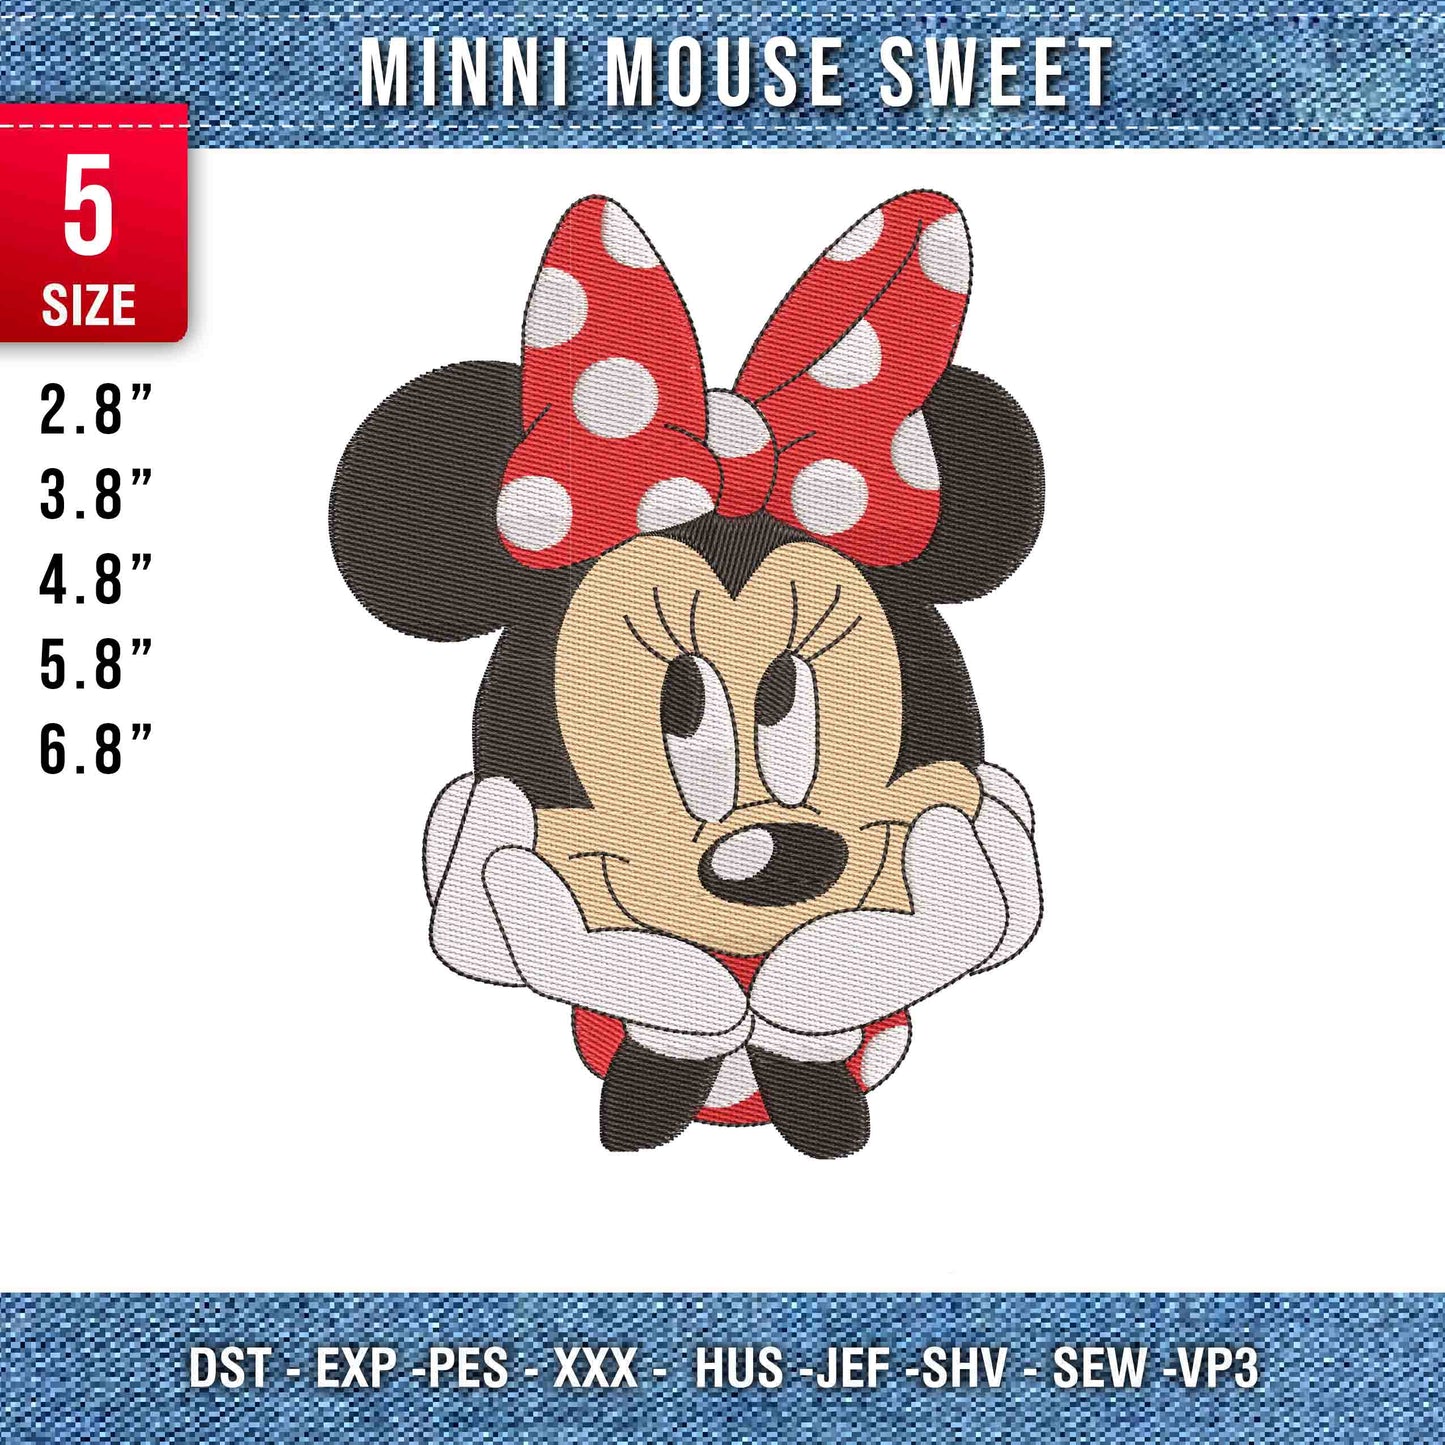 minni mouse sweet